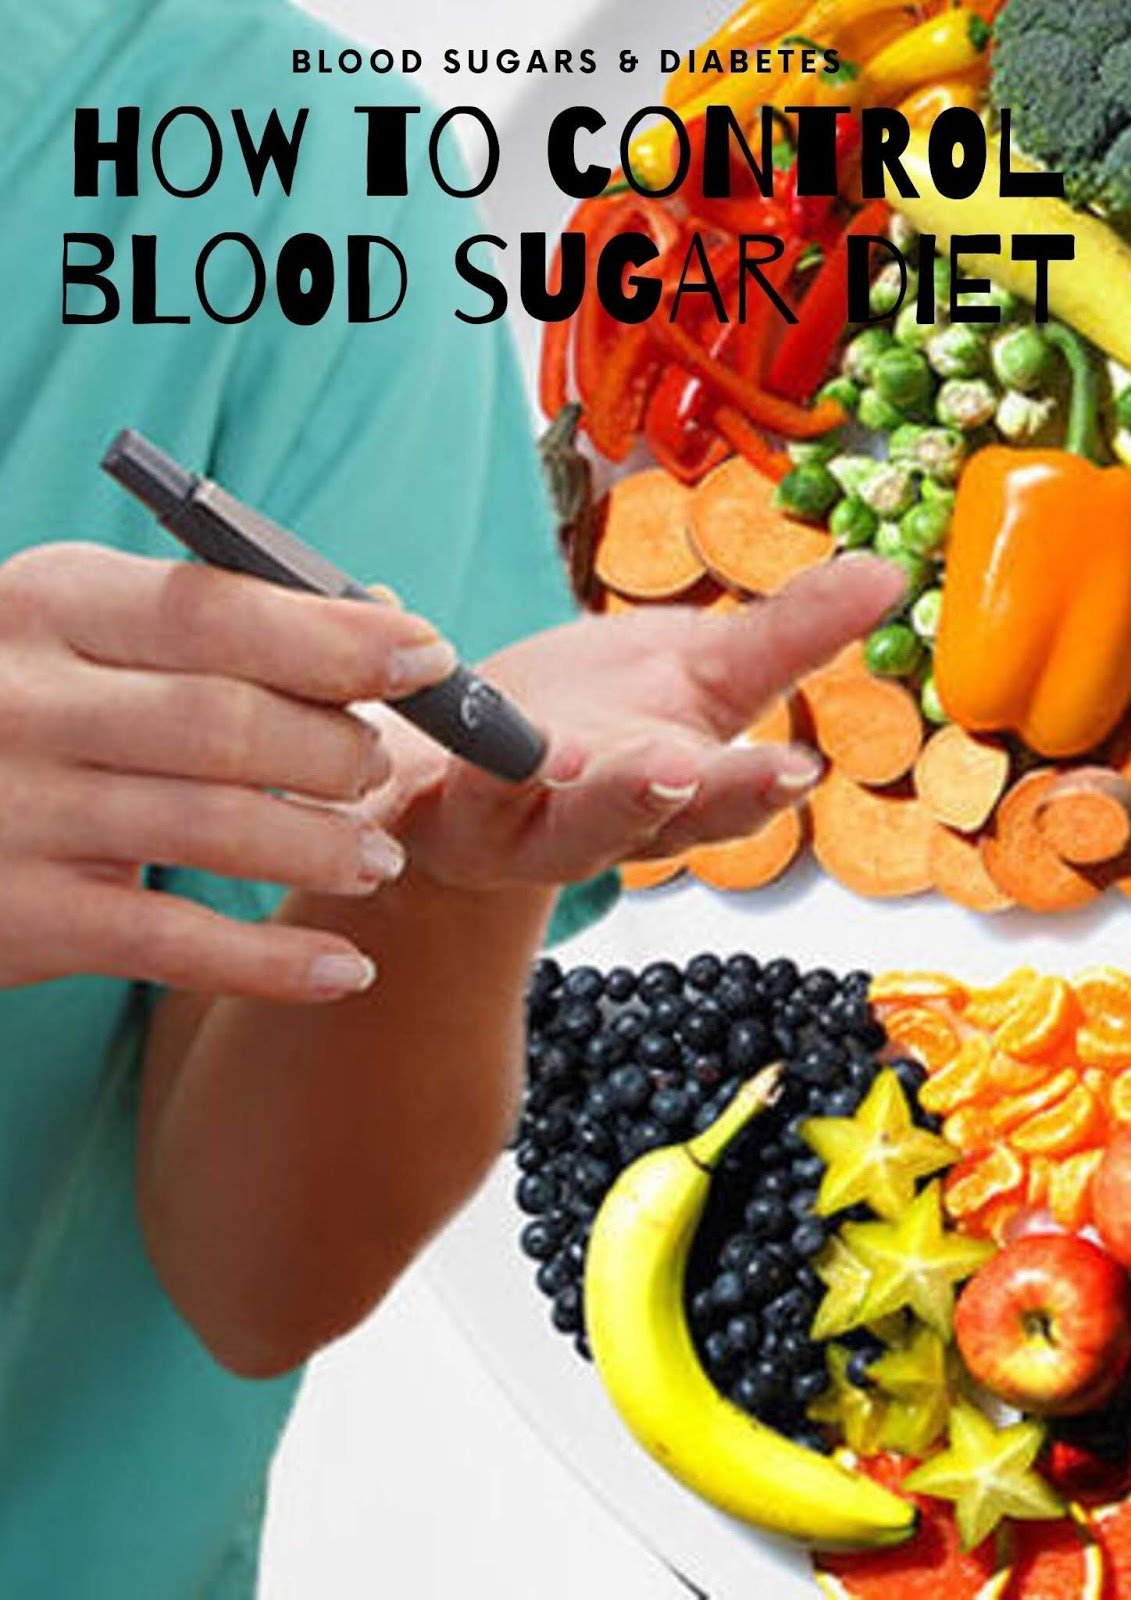 Blood Sugar Symptoms: How to control blood sugar diet